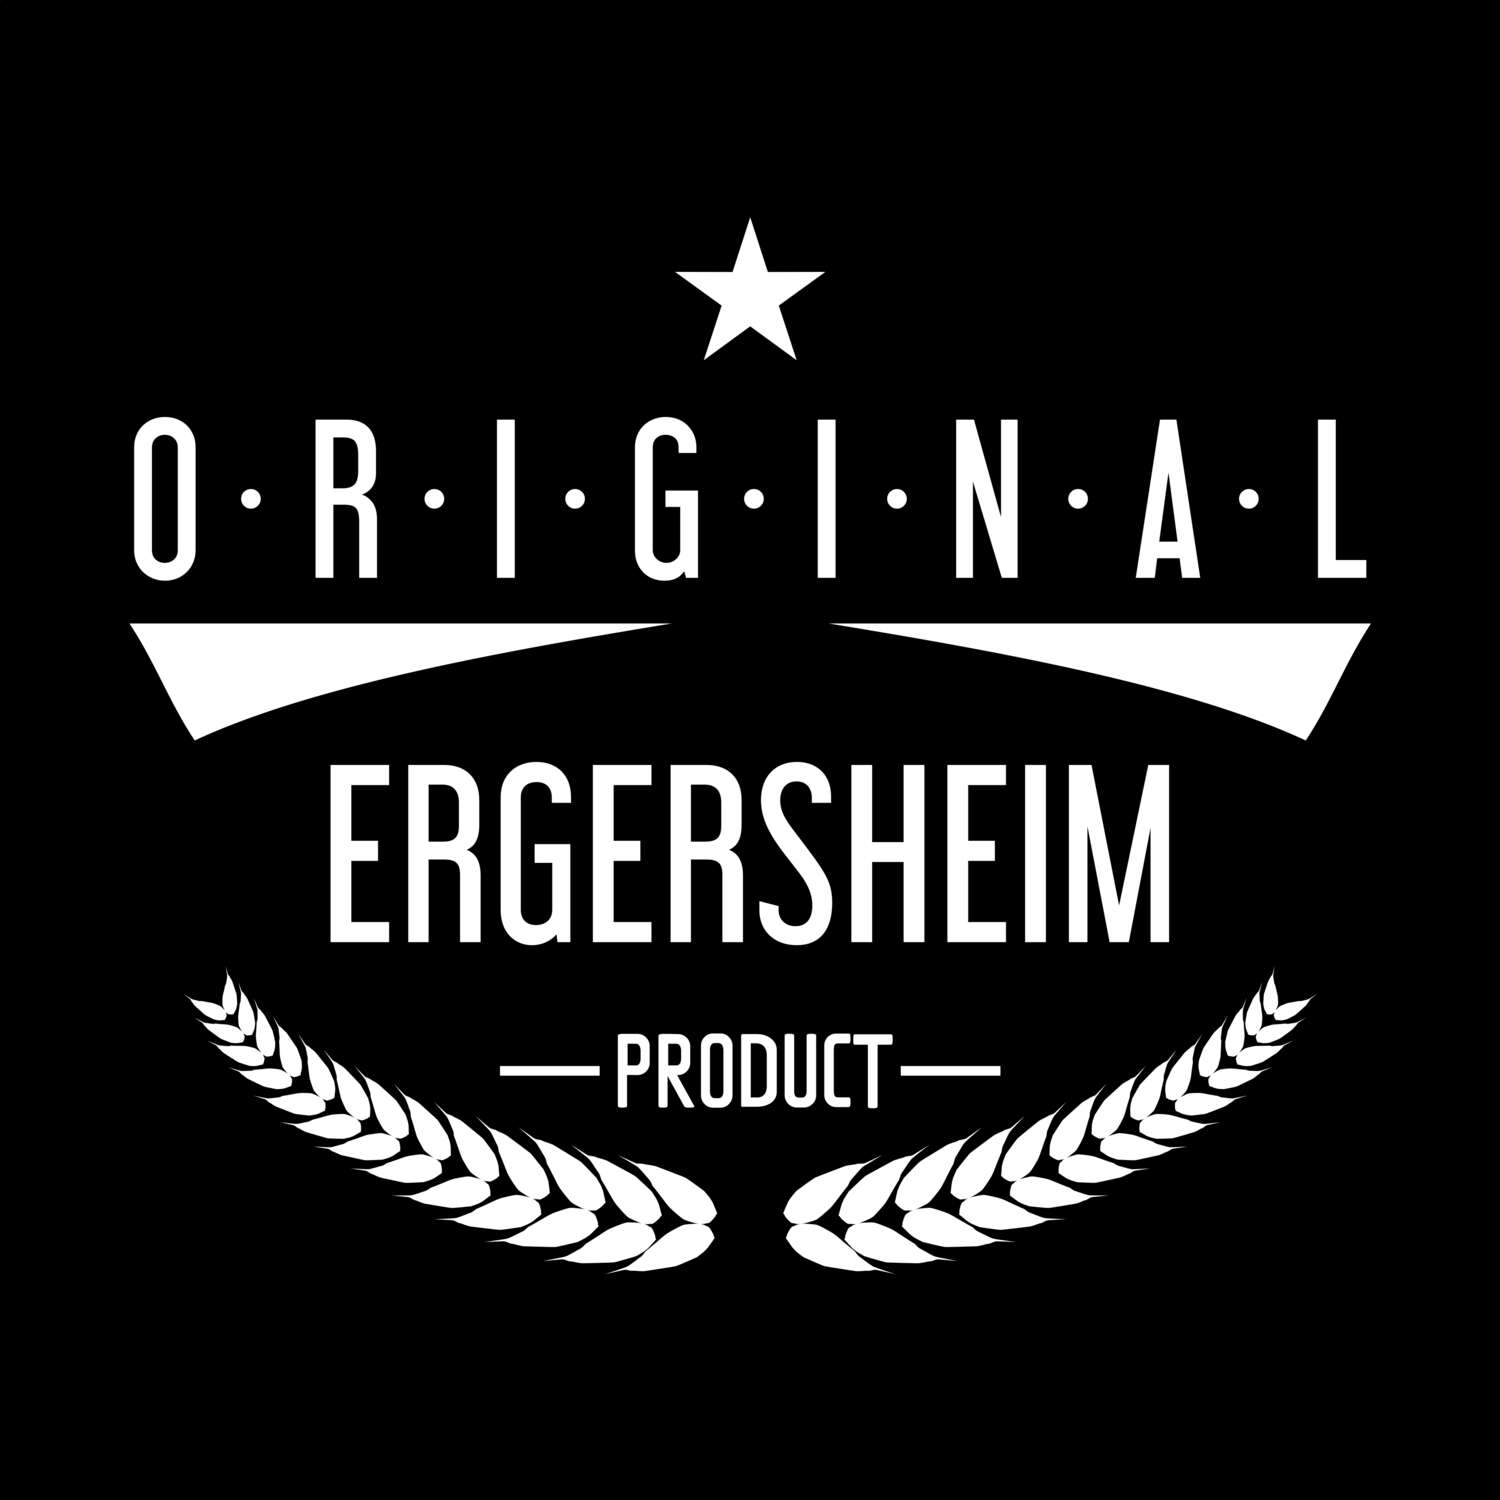 Ergersheim T-Shirt »Original Product«